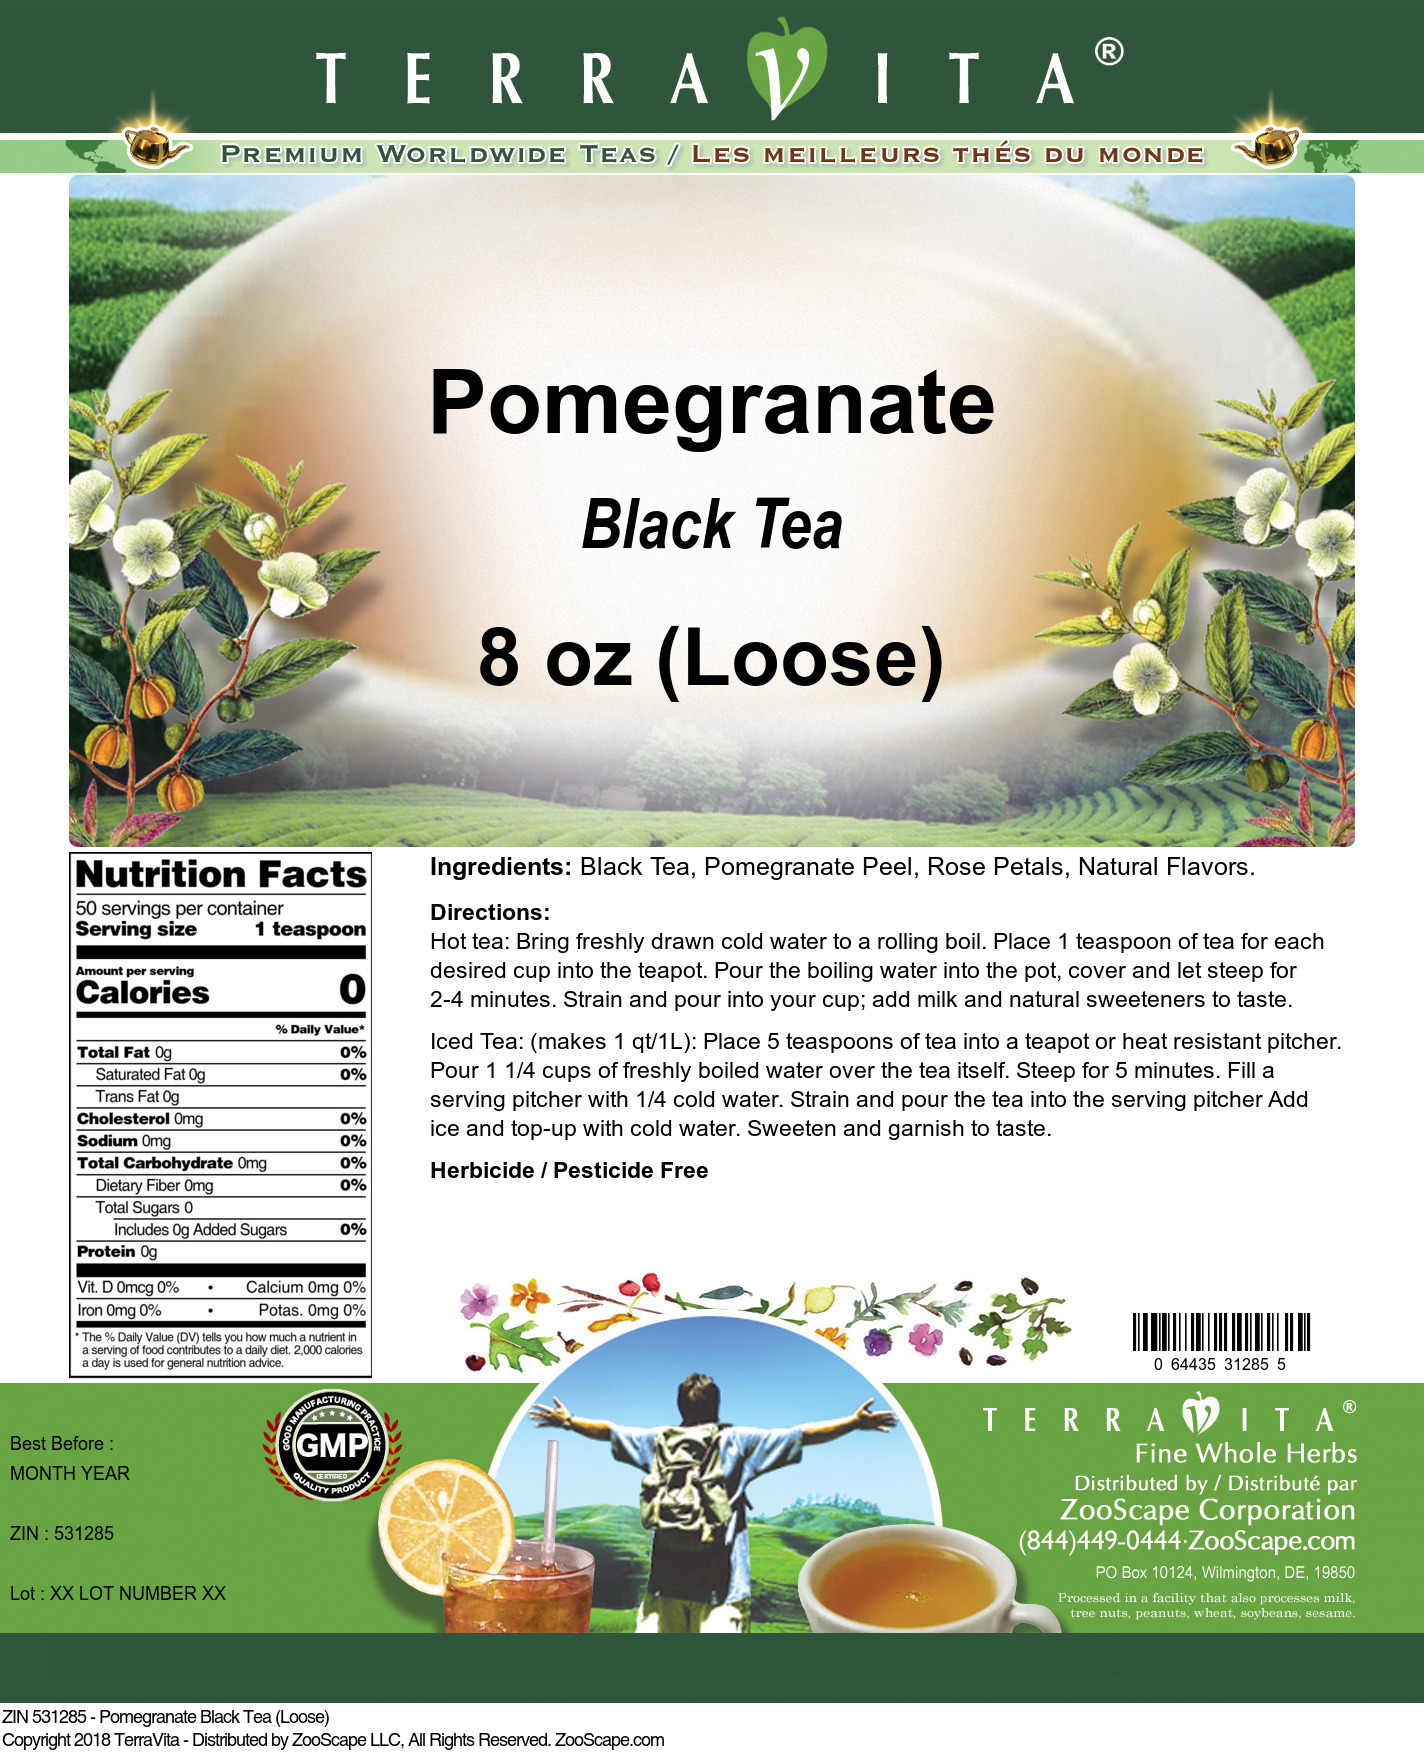 Pomegranate Black Tea (Loose) - Label